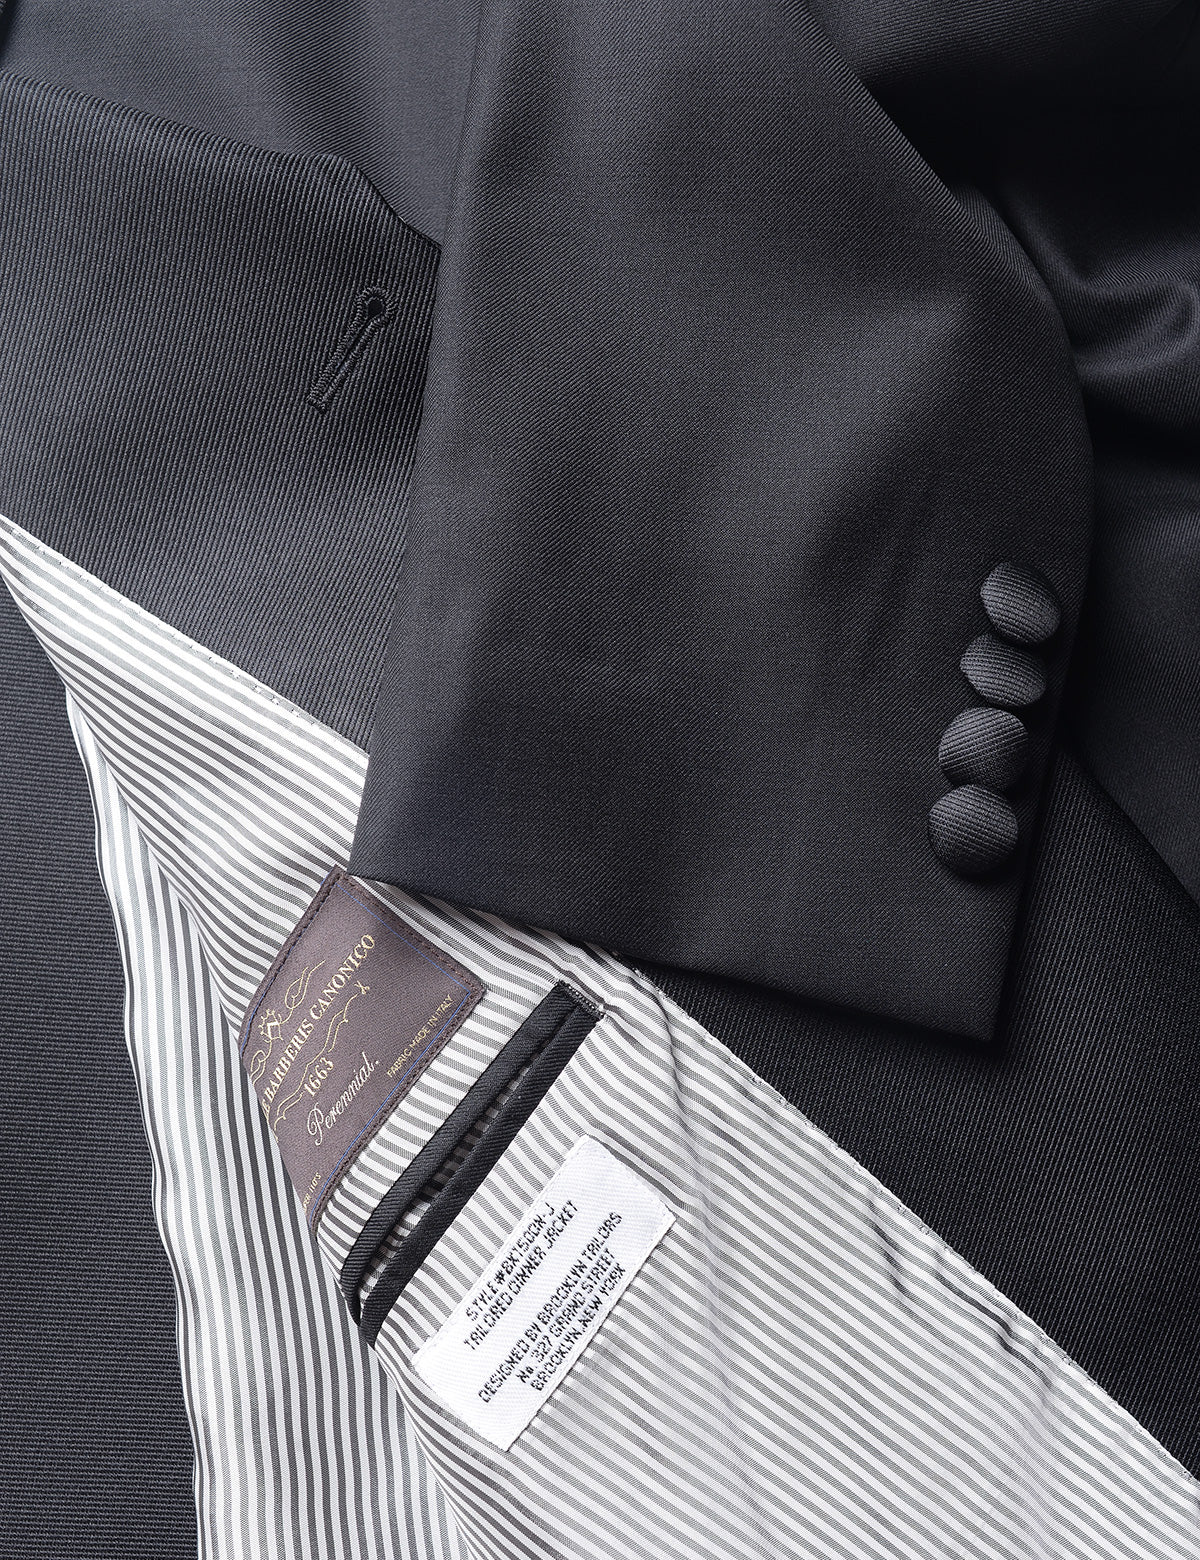 BKT50 Shawl Collar Tuxedo Jacket in Super 120s Twill - Black with Grosgrain Lapel